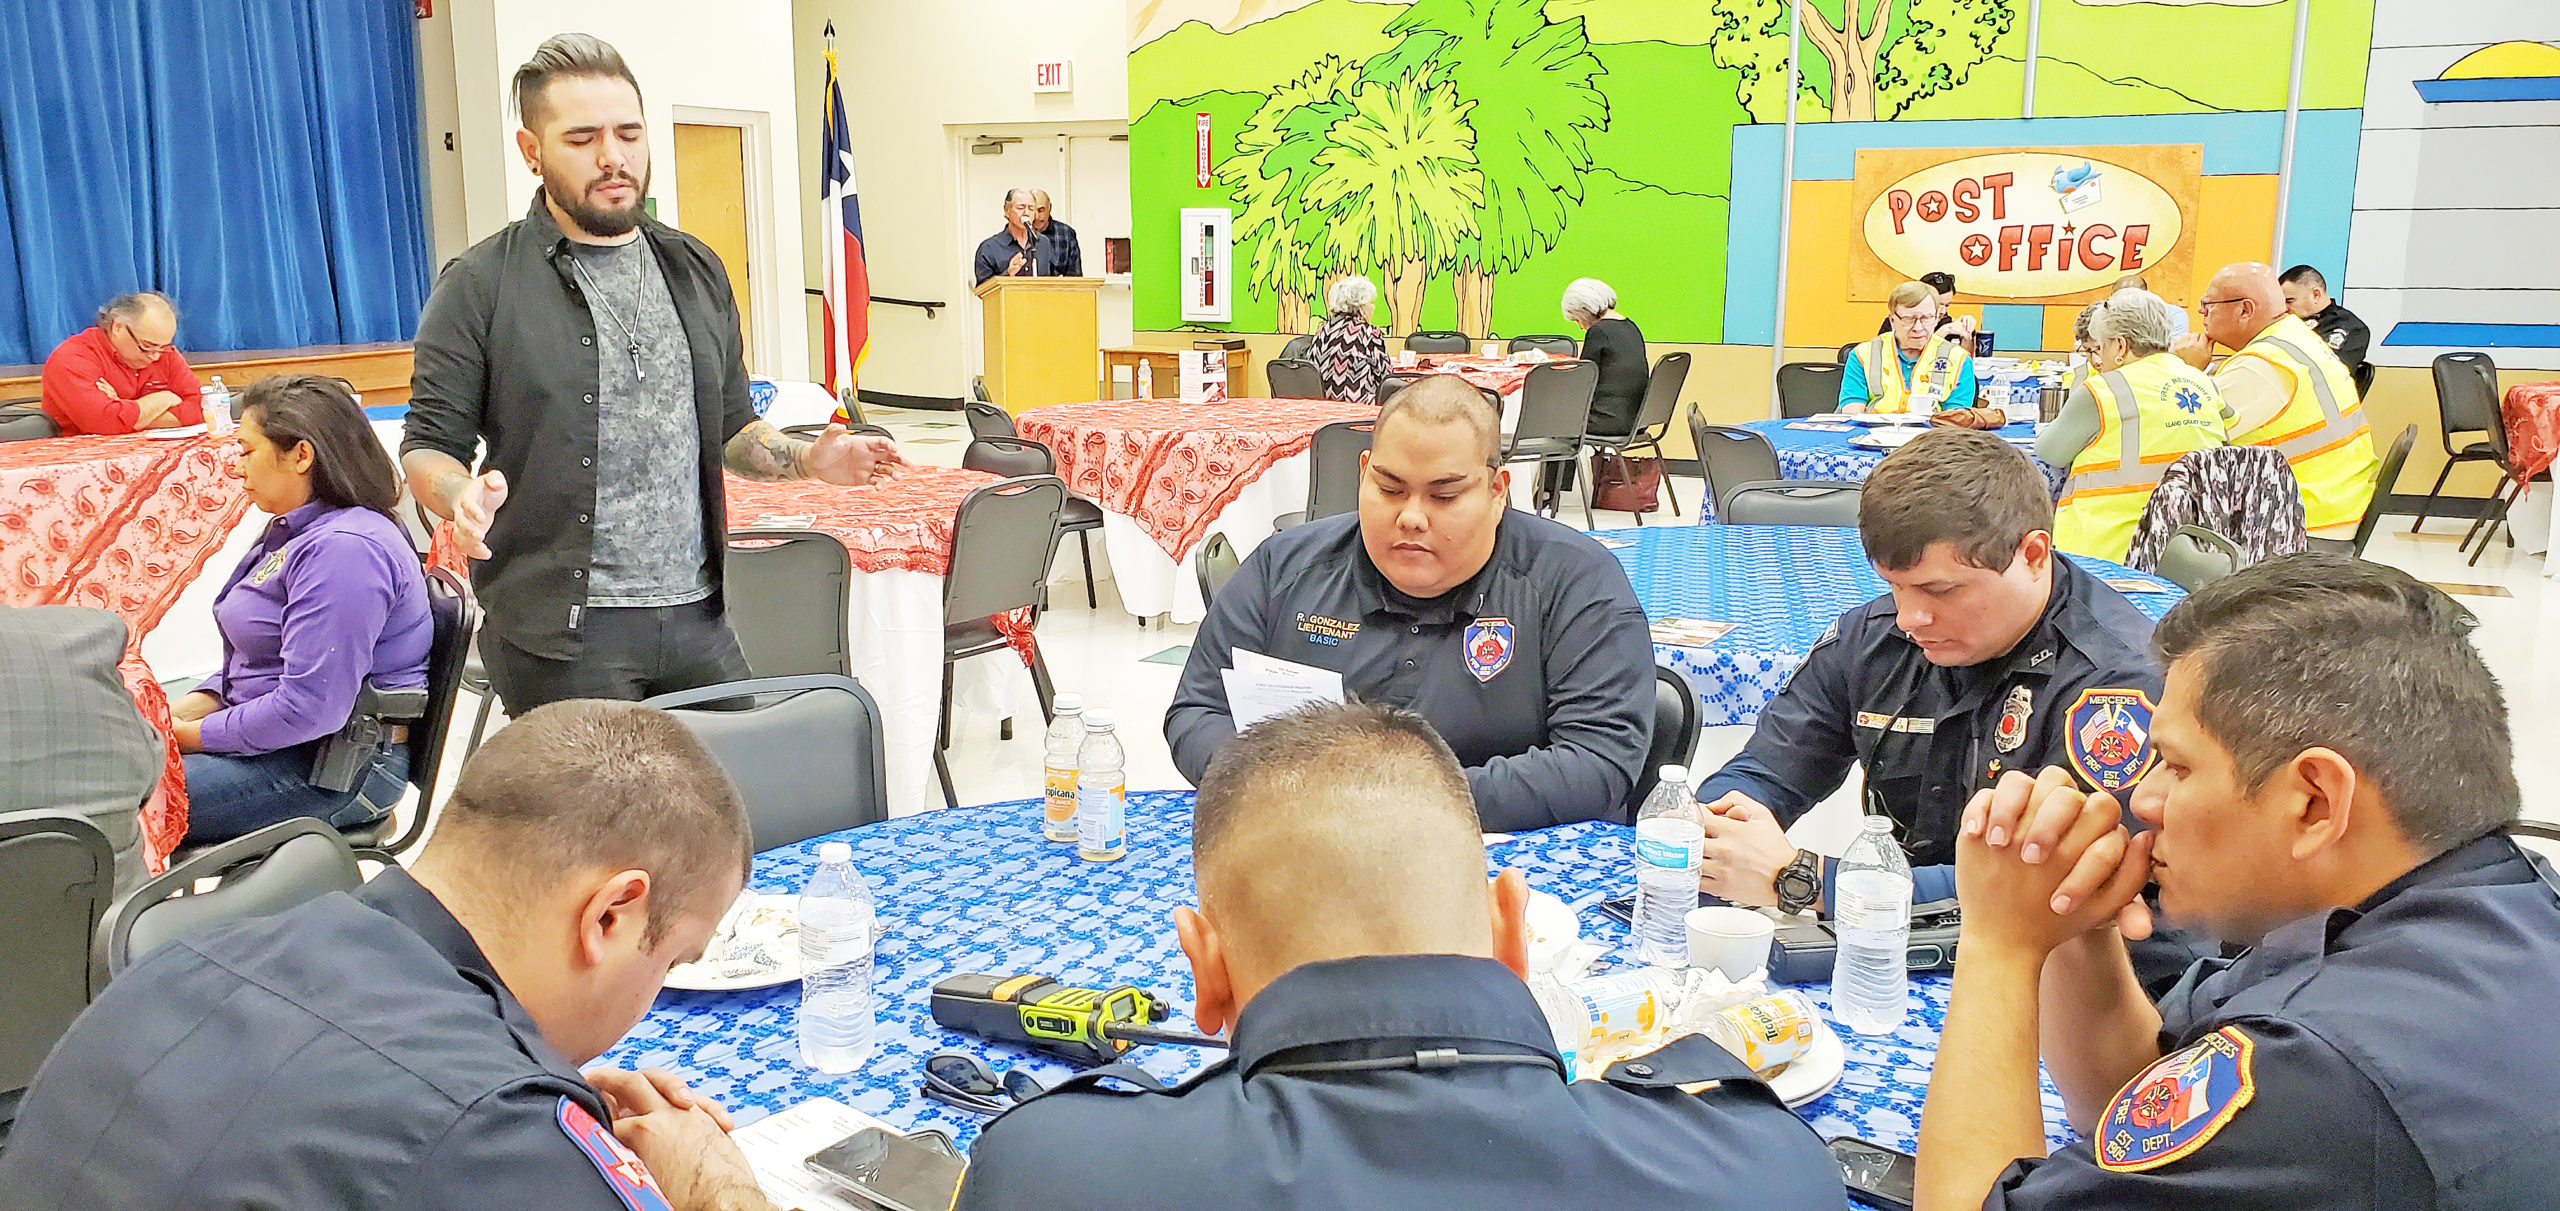 Power of prayer: Local organization holds prayer breakfast for first responders